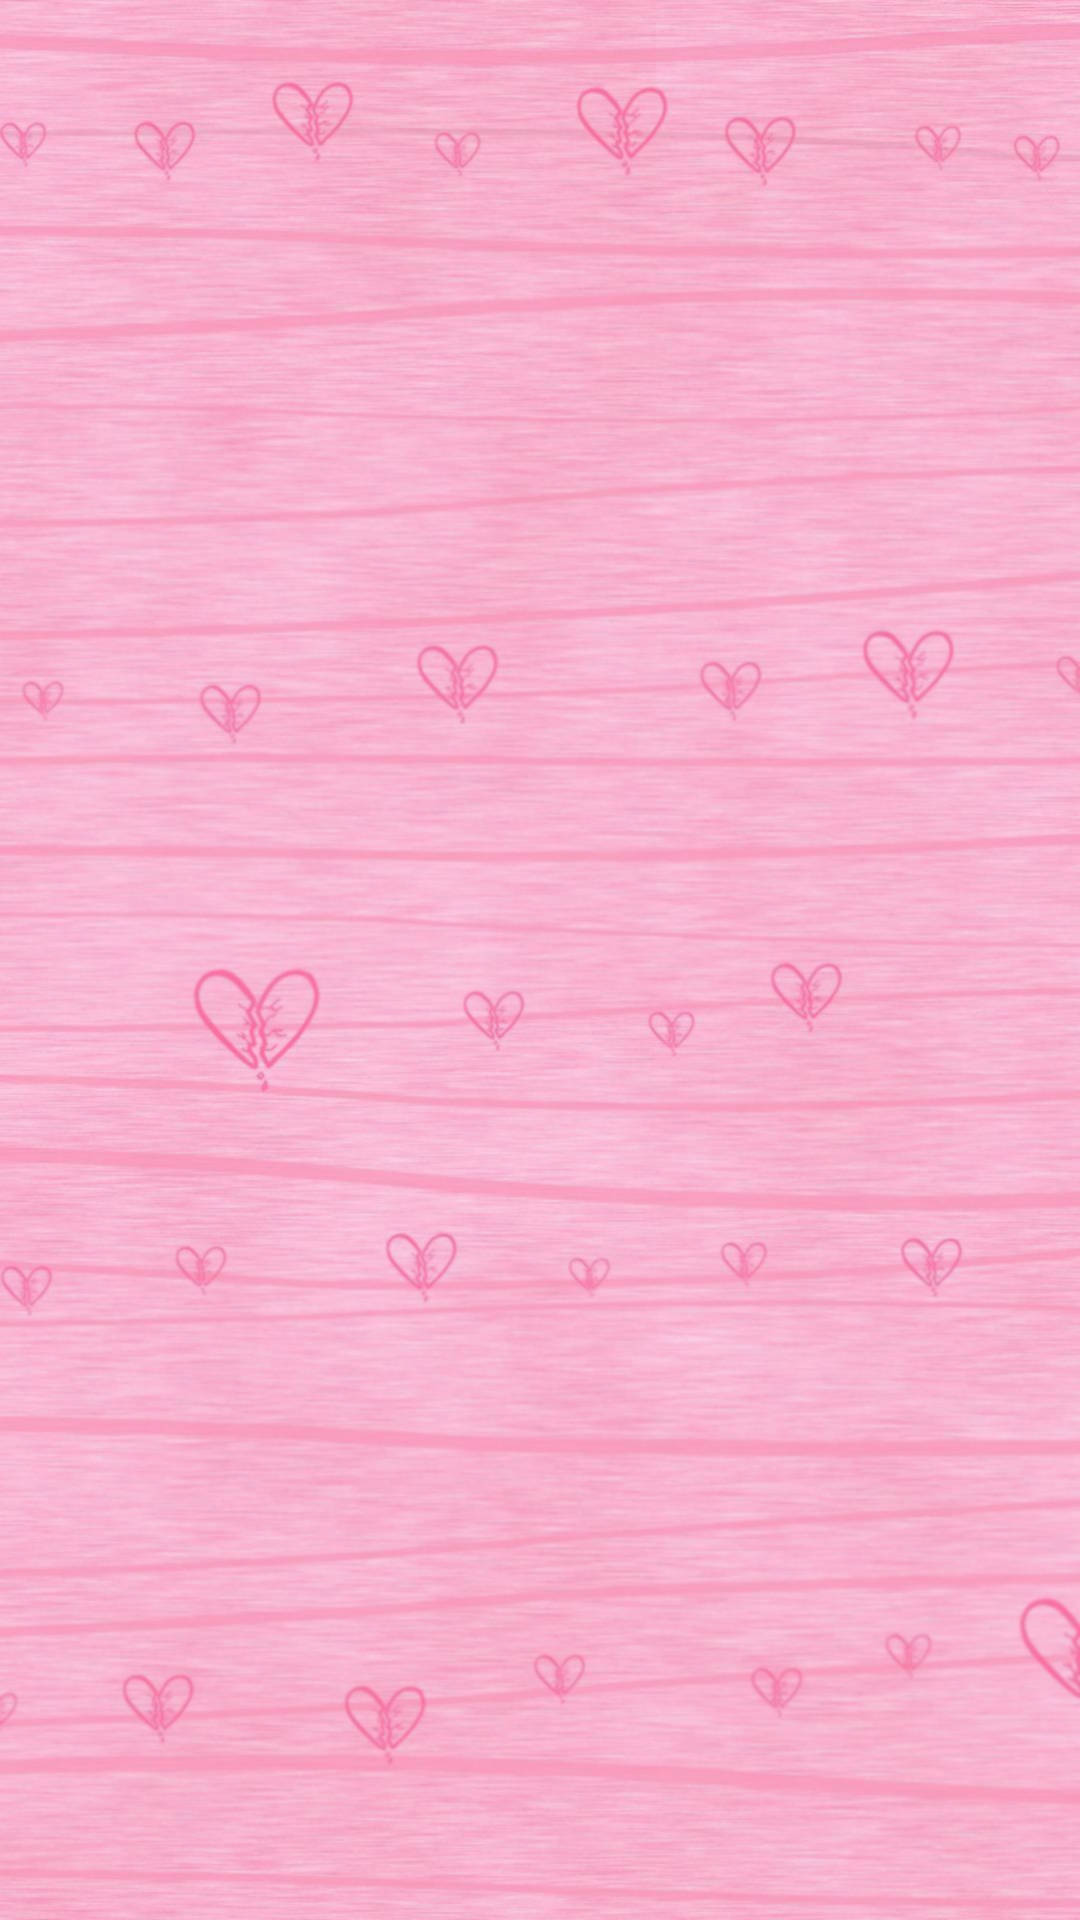 Cute Pink Broken Hearts